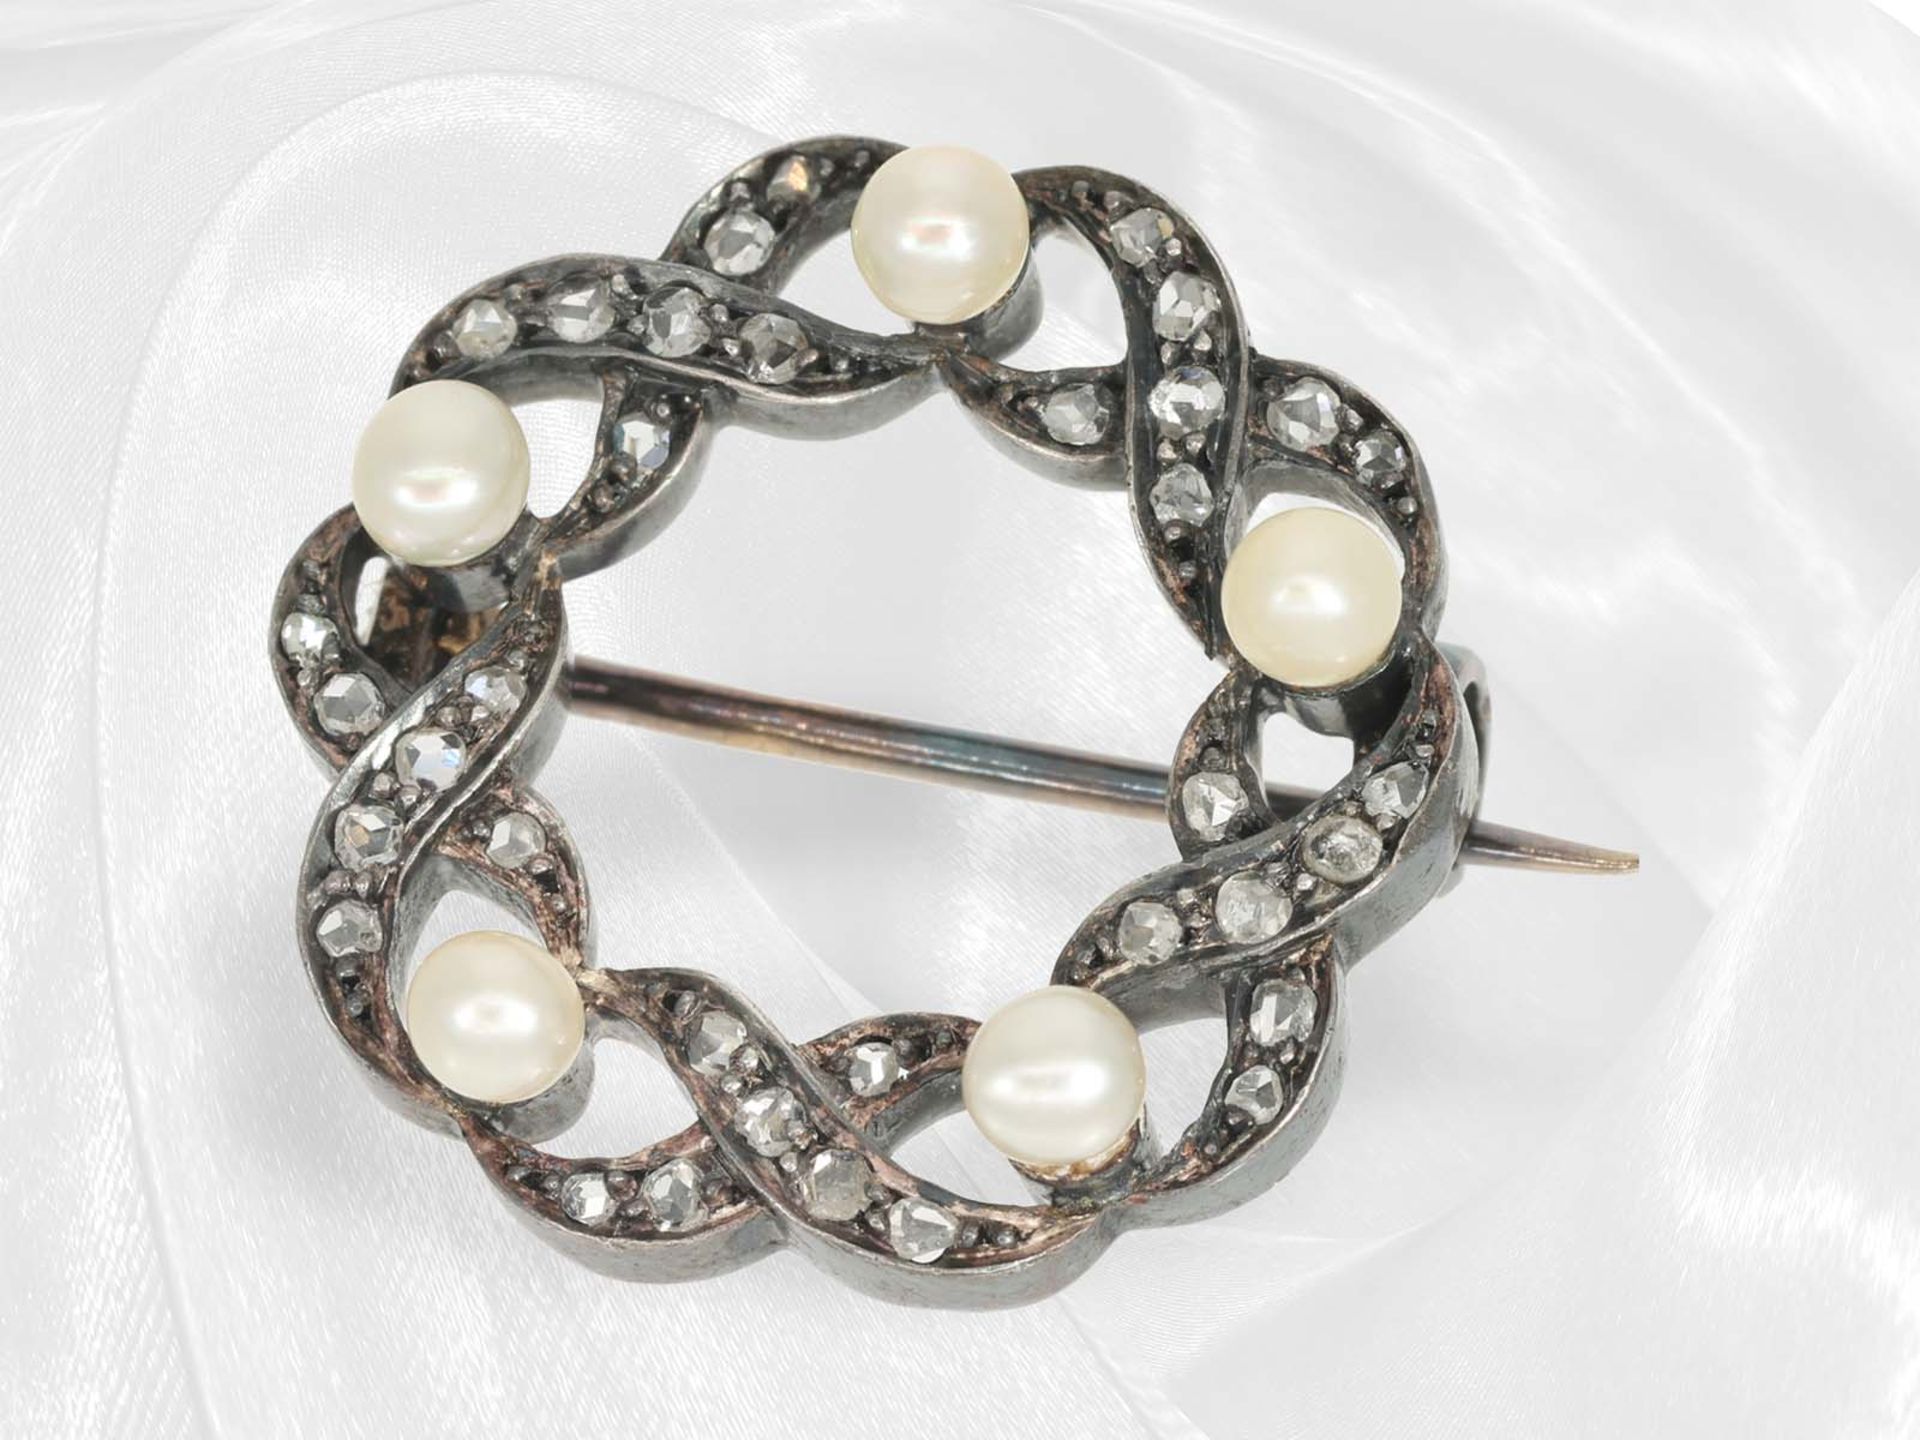 Antique diamond/pearl brooch, France ca. 1880